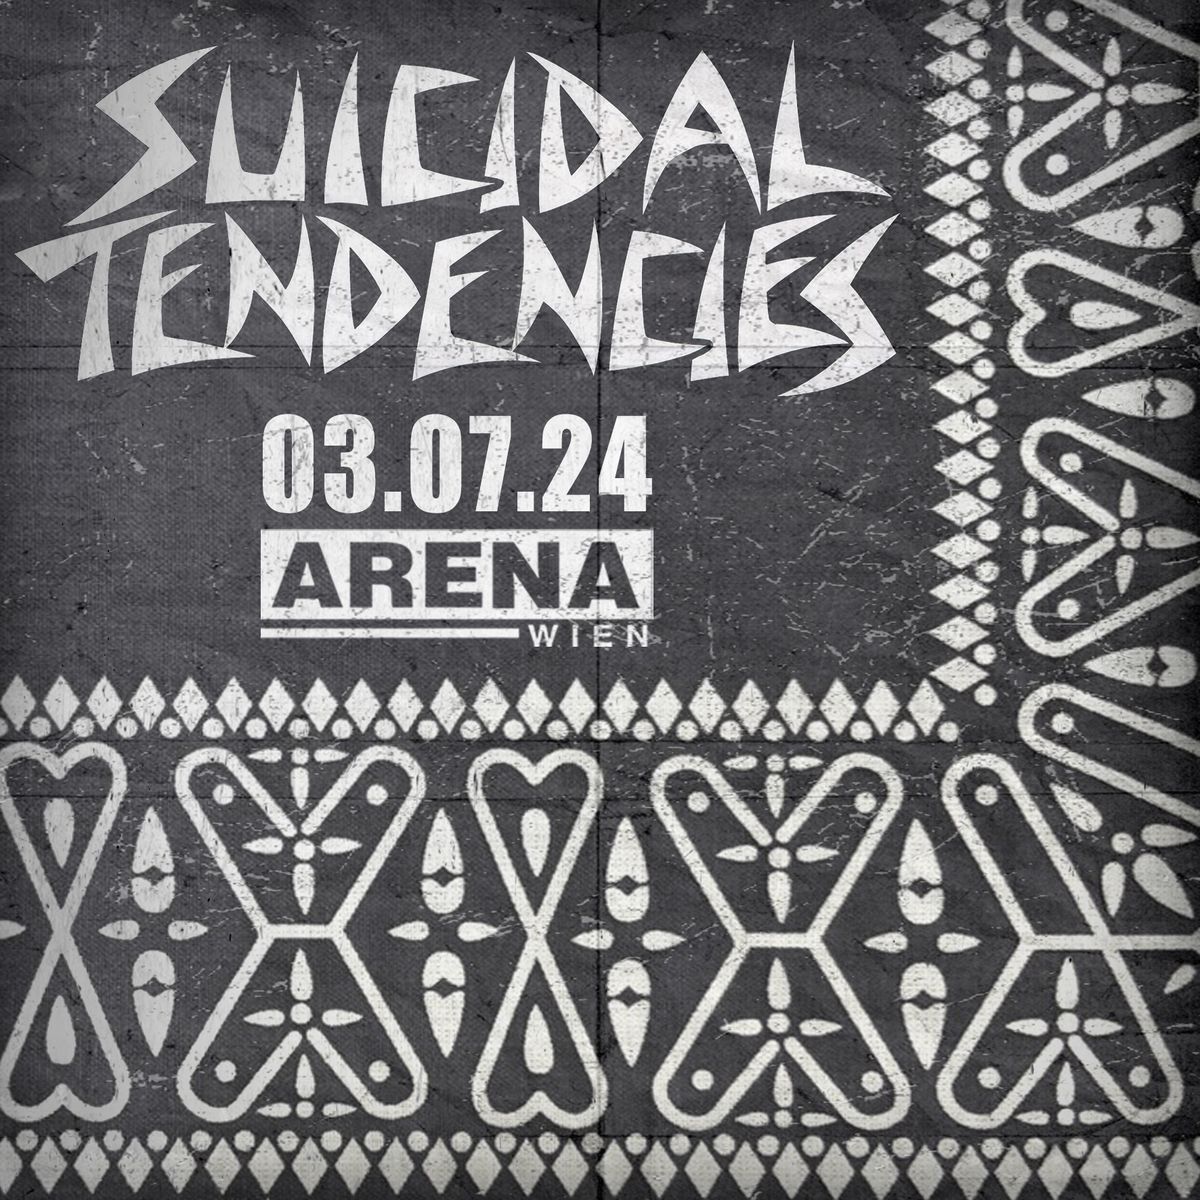 Suicidal Tendencies I Arena Wien